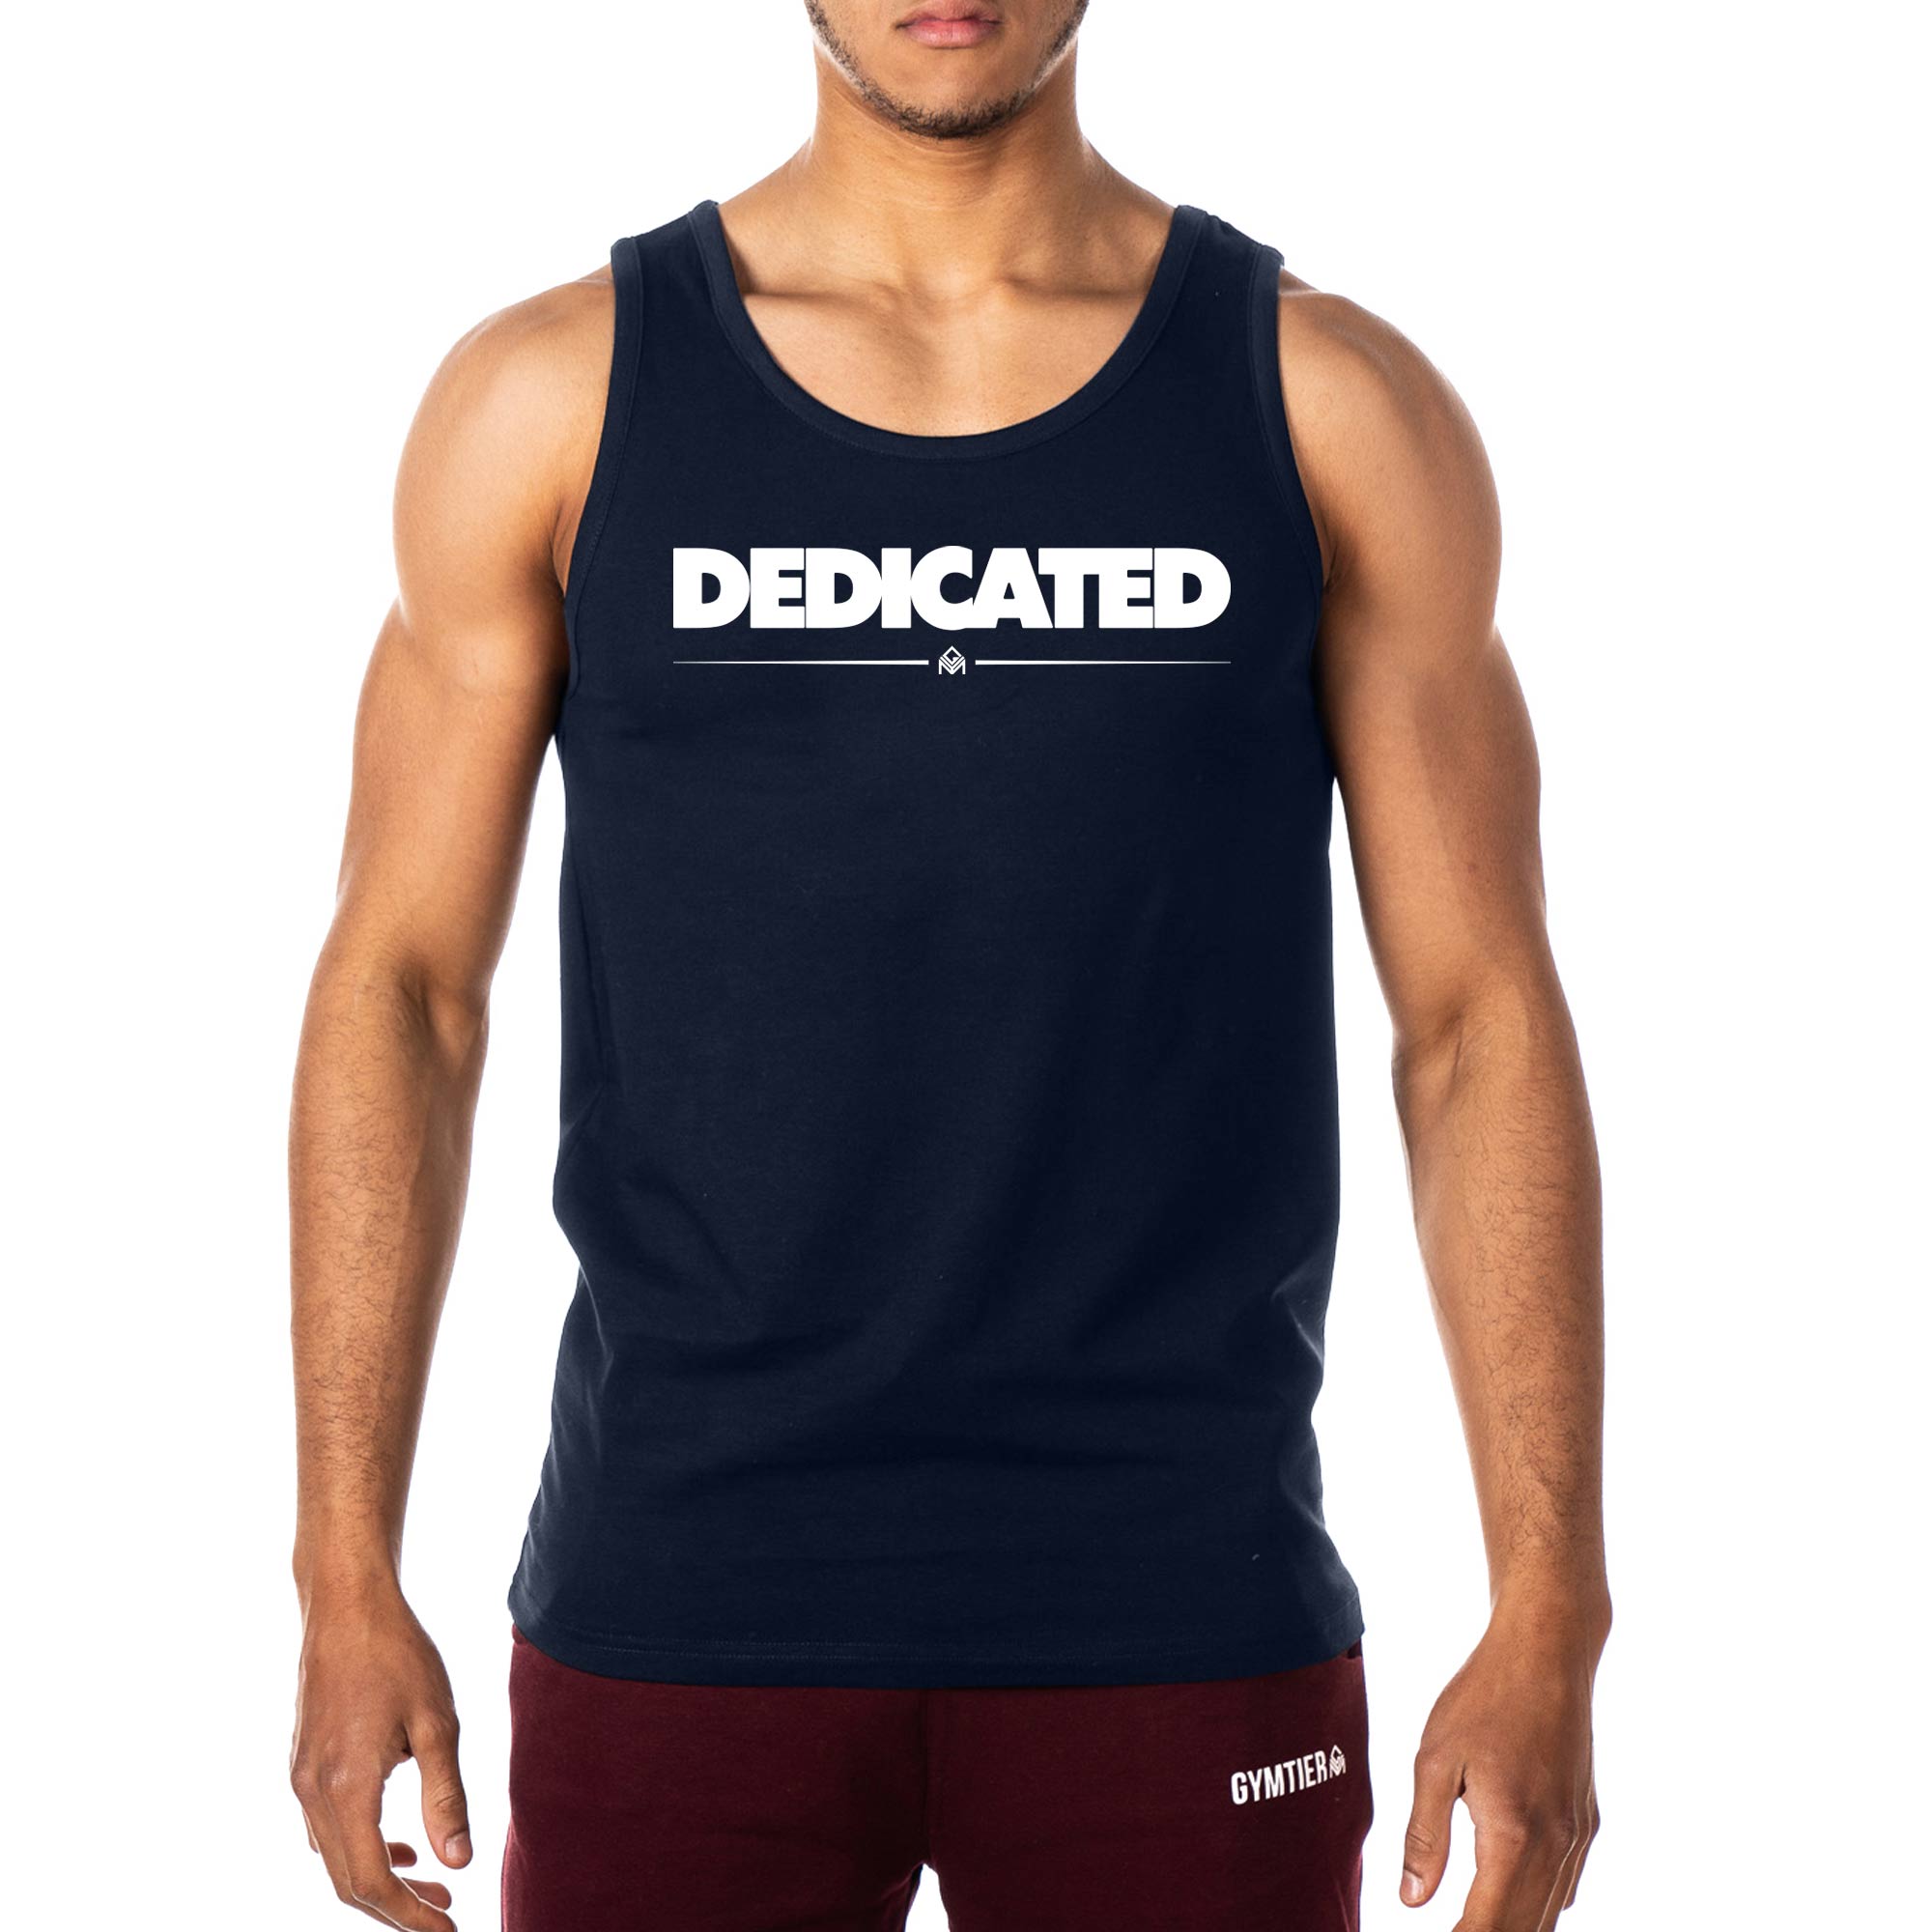 Dedicated Gym Vest